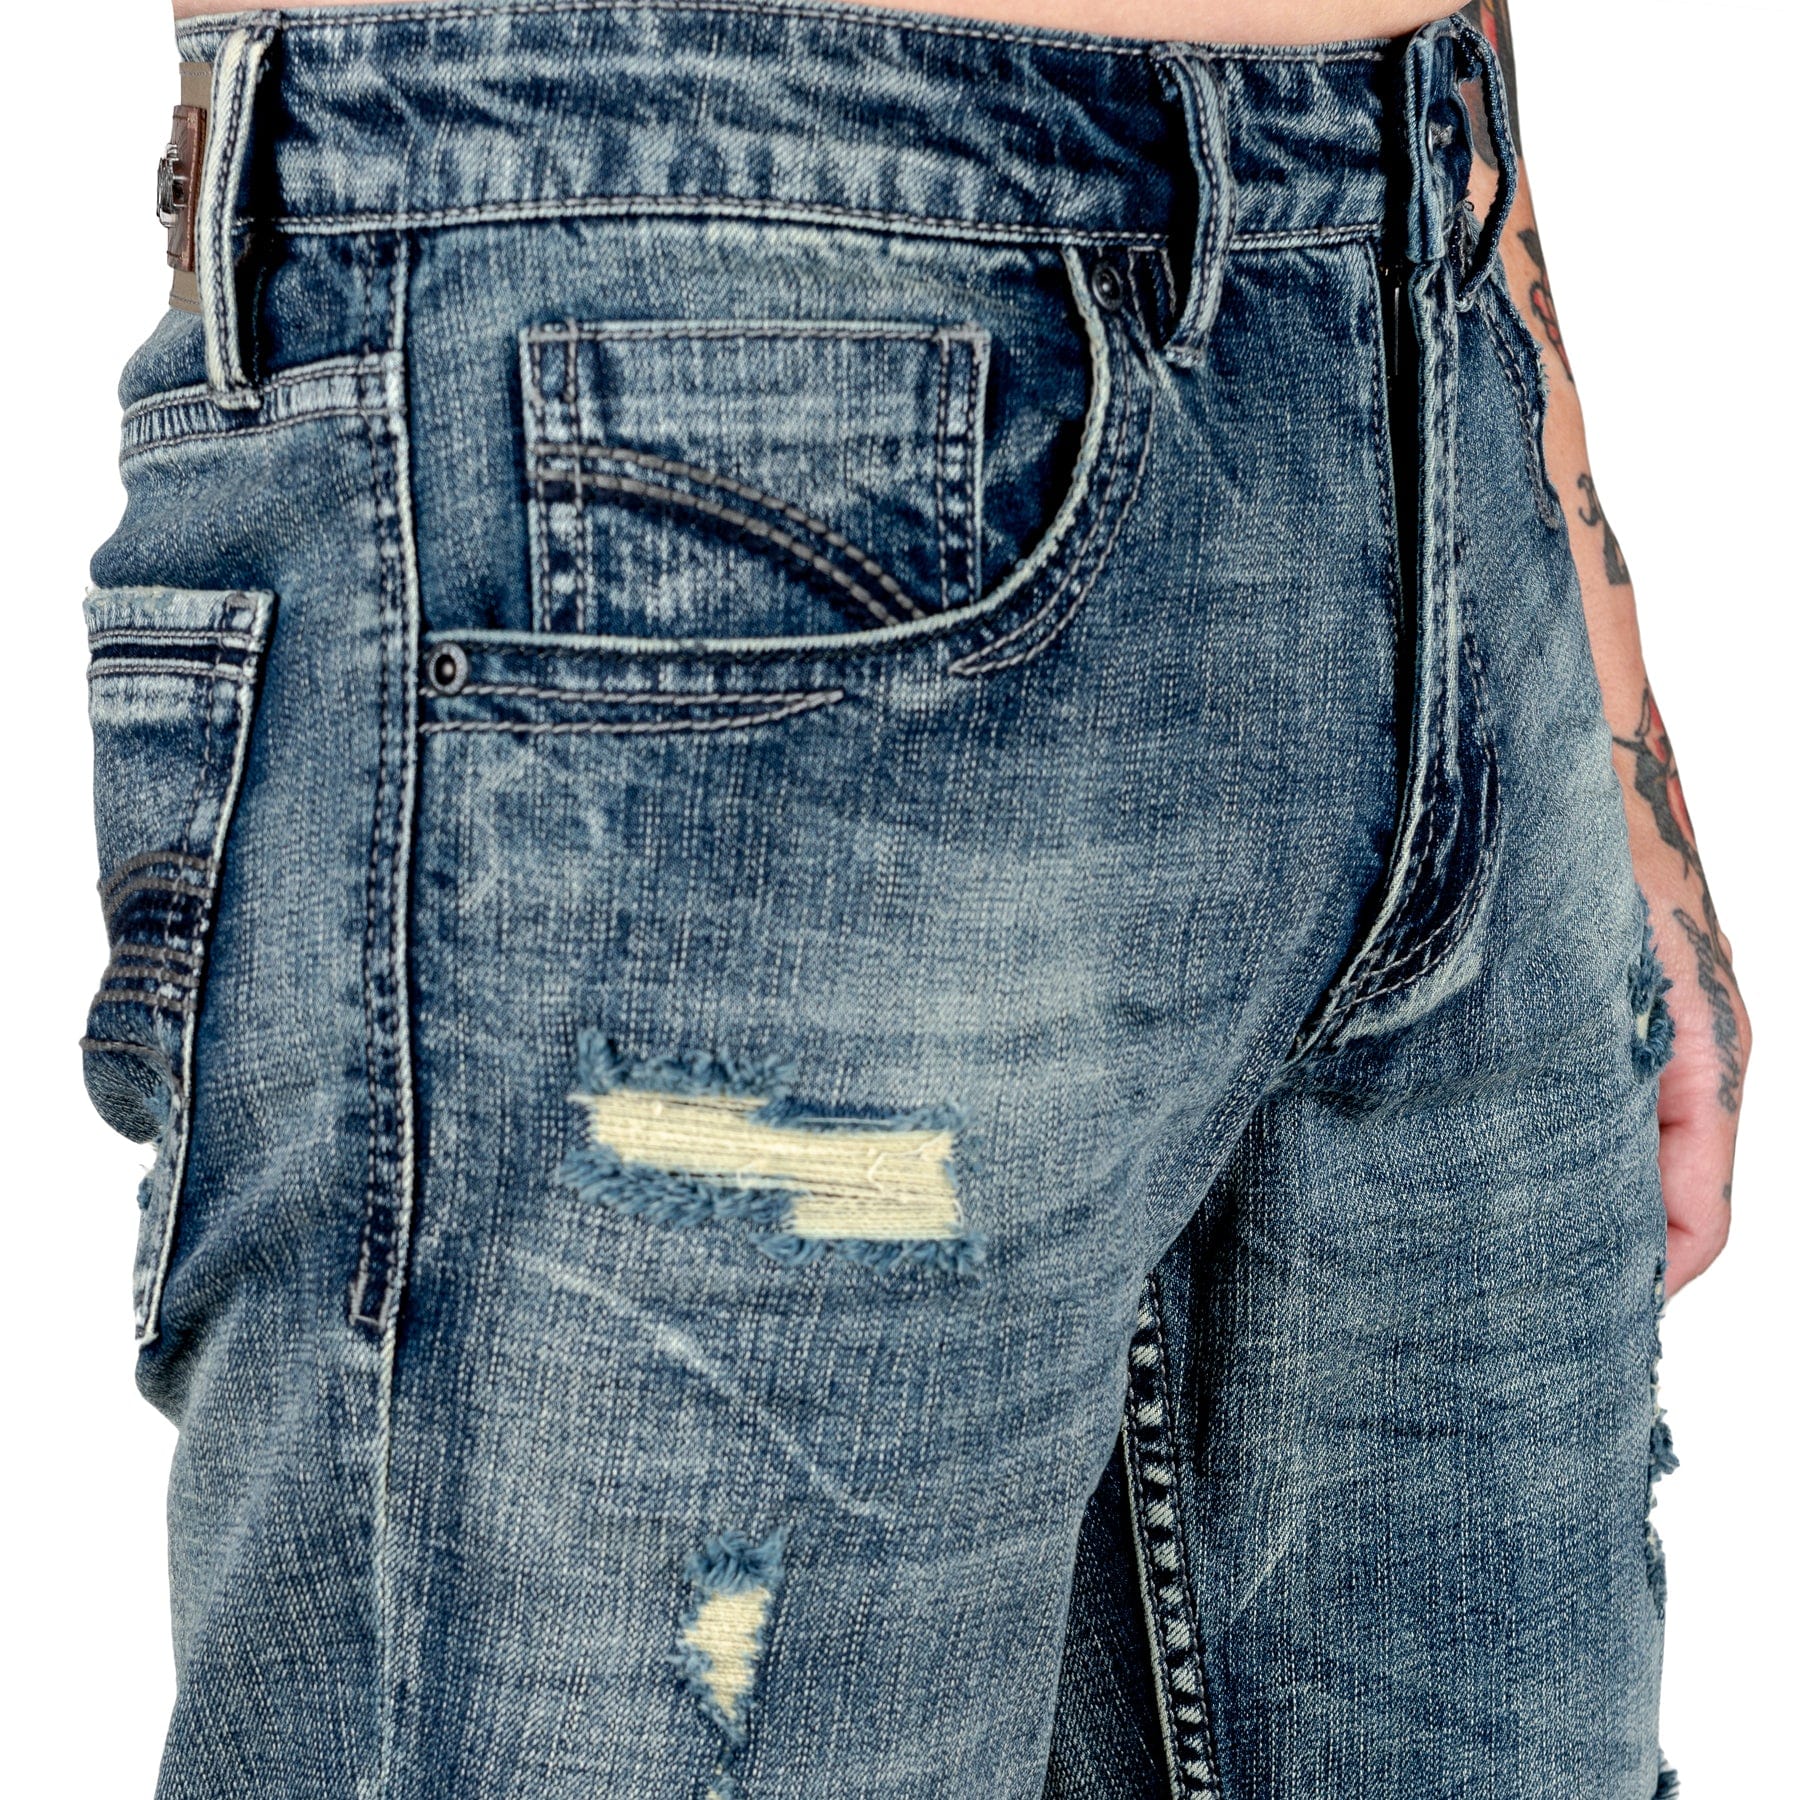 Wornstar Clothing Mens Jeans. Trailblazer Denim Pants - Faded Blue